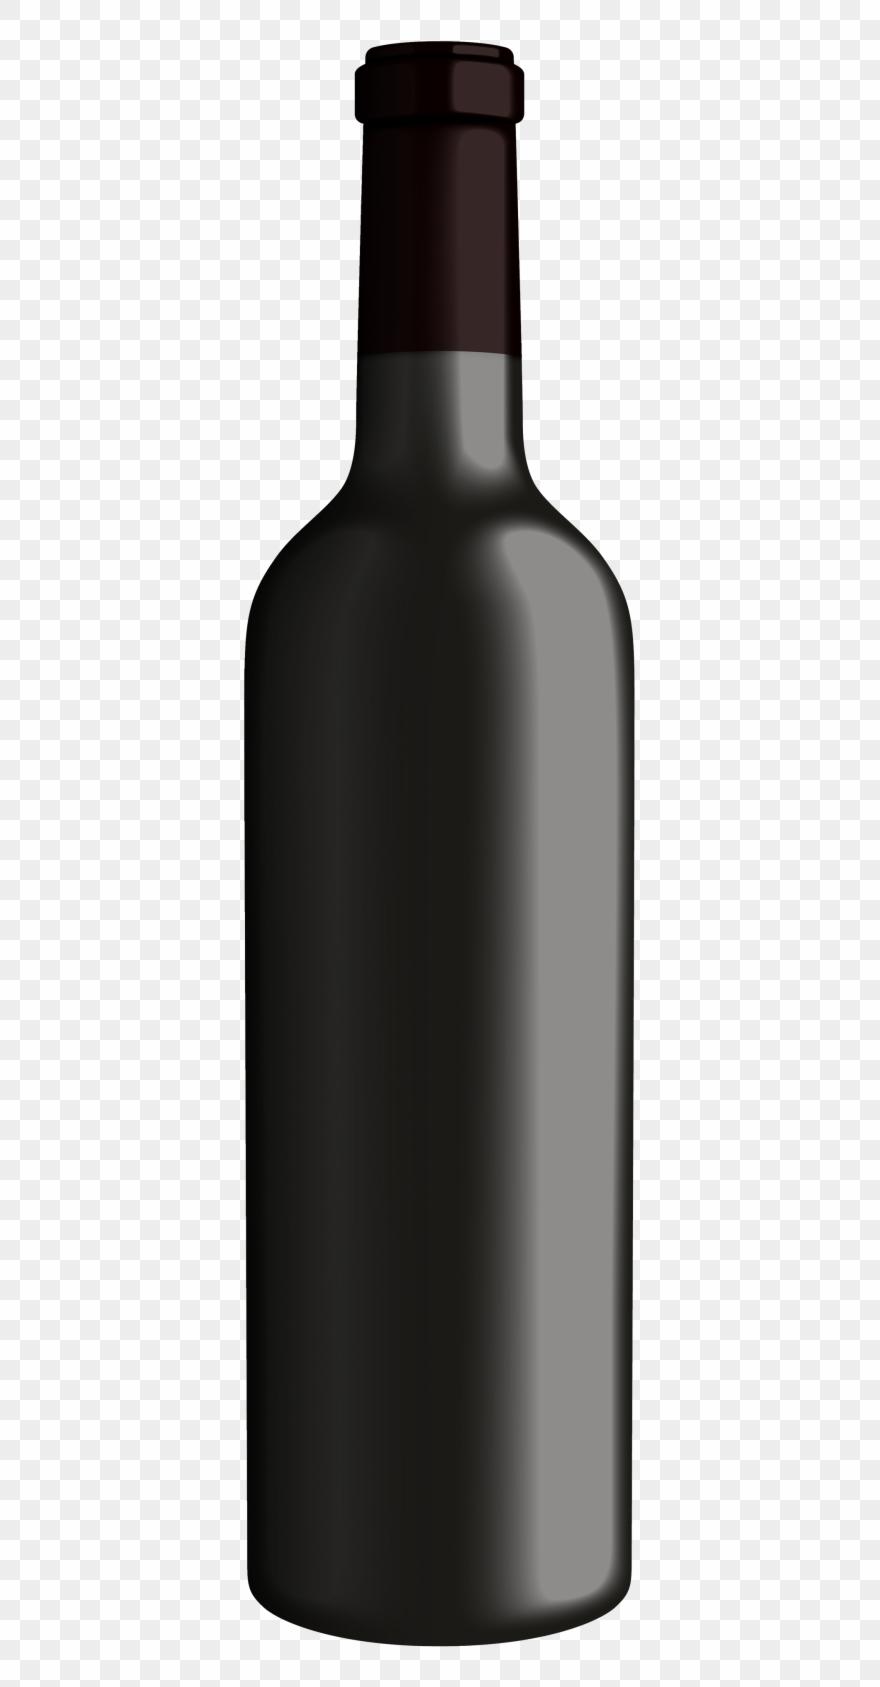 HD Wine Bottle Silhouette Clip Art Images